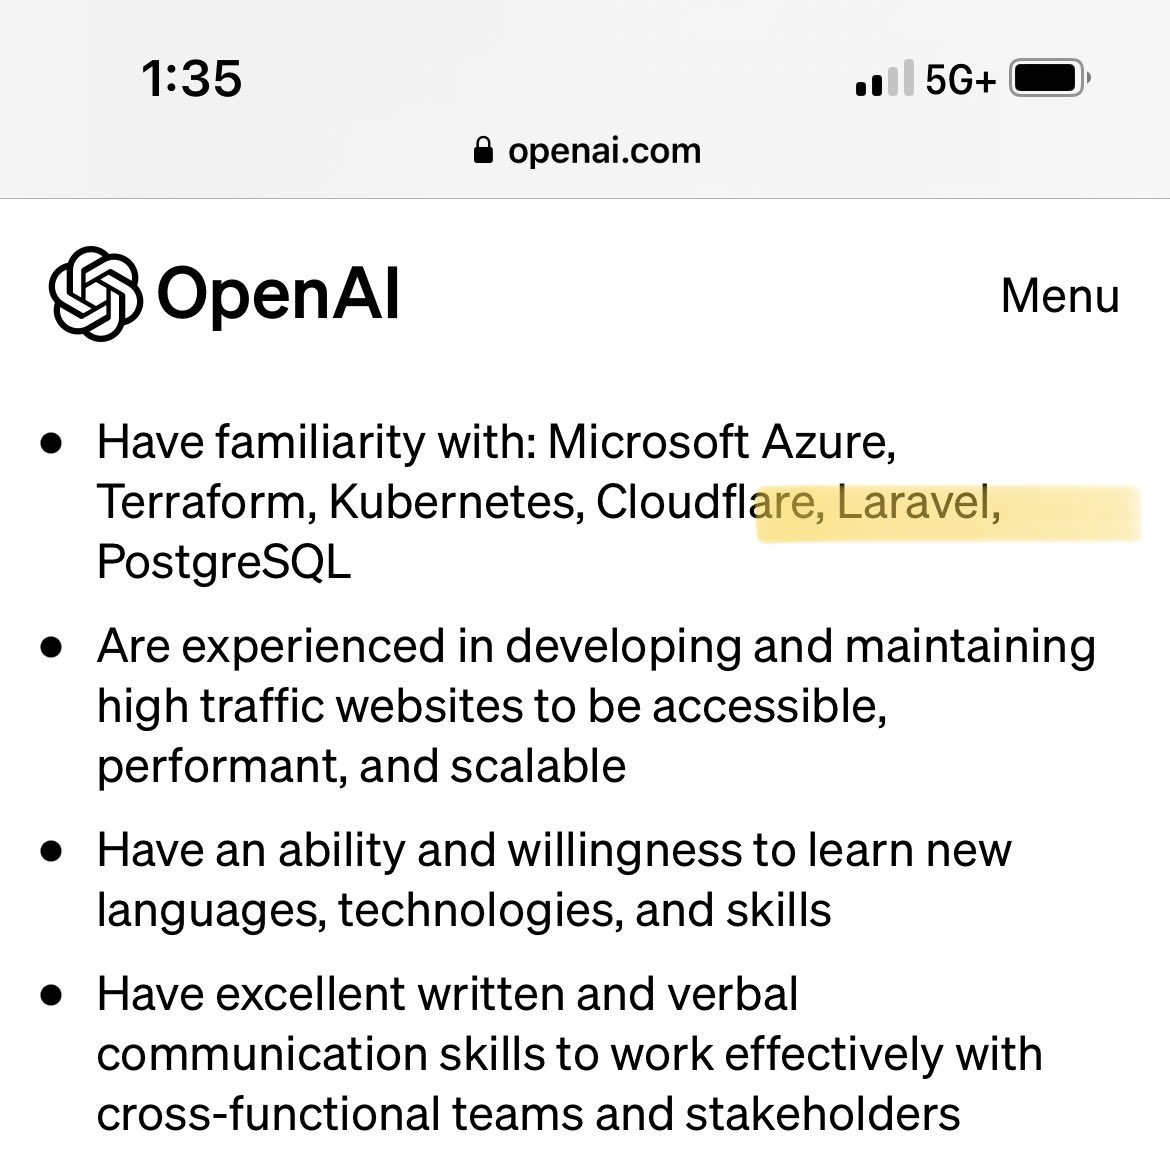 OpenAI hiring for Laravel. Probably nothing.